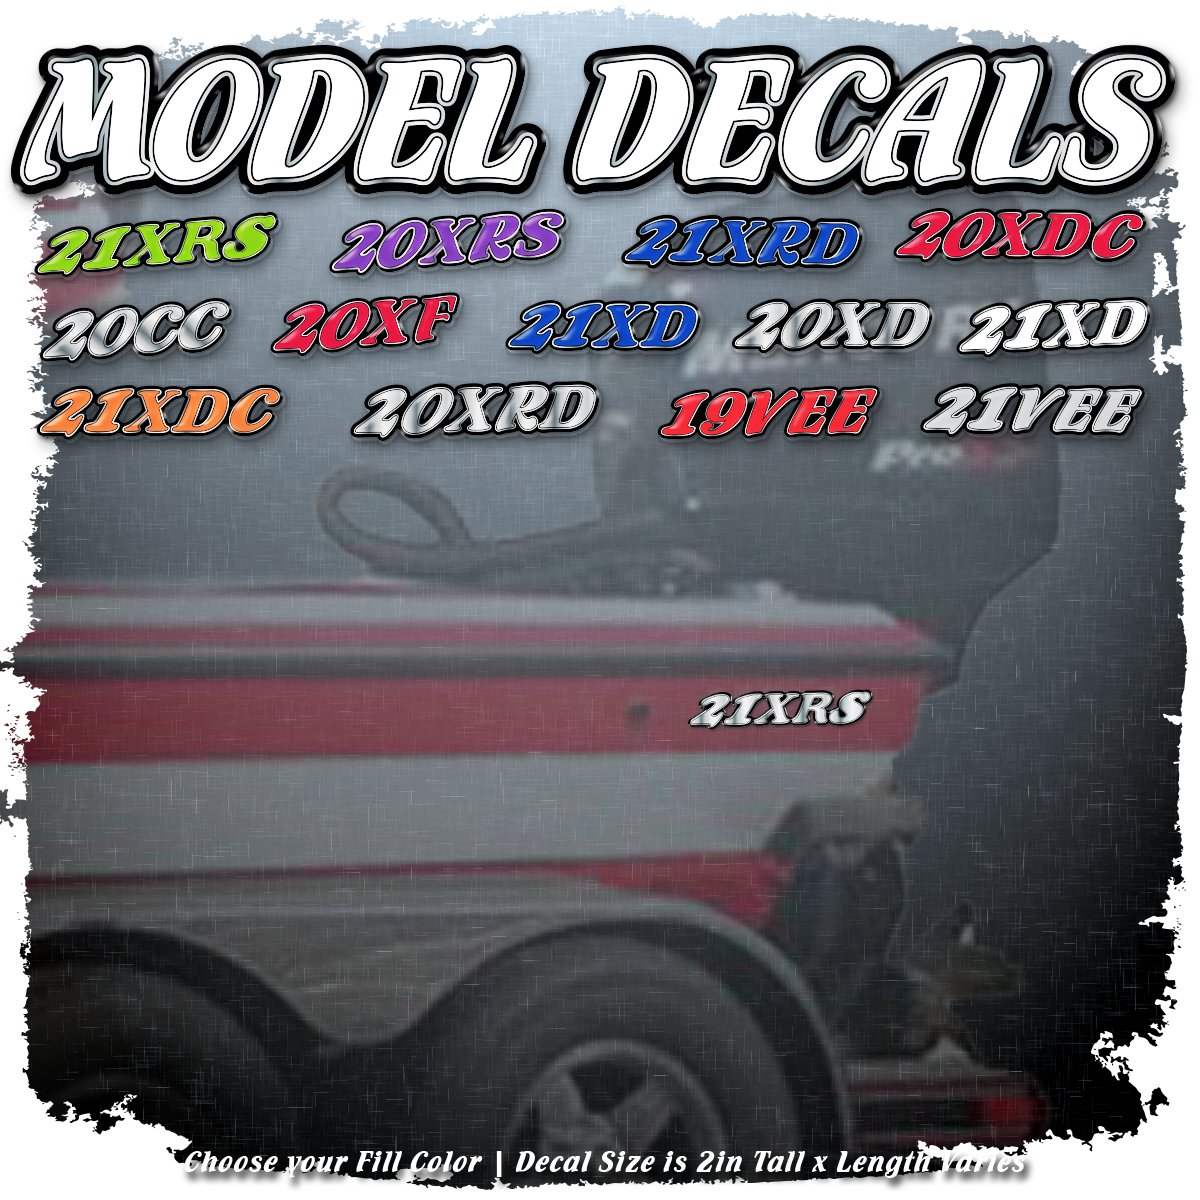 Domed Bullet "model number" Decal Set, Choose Your Color (2 included)